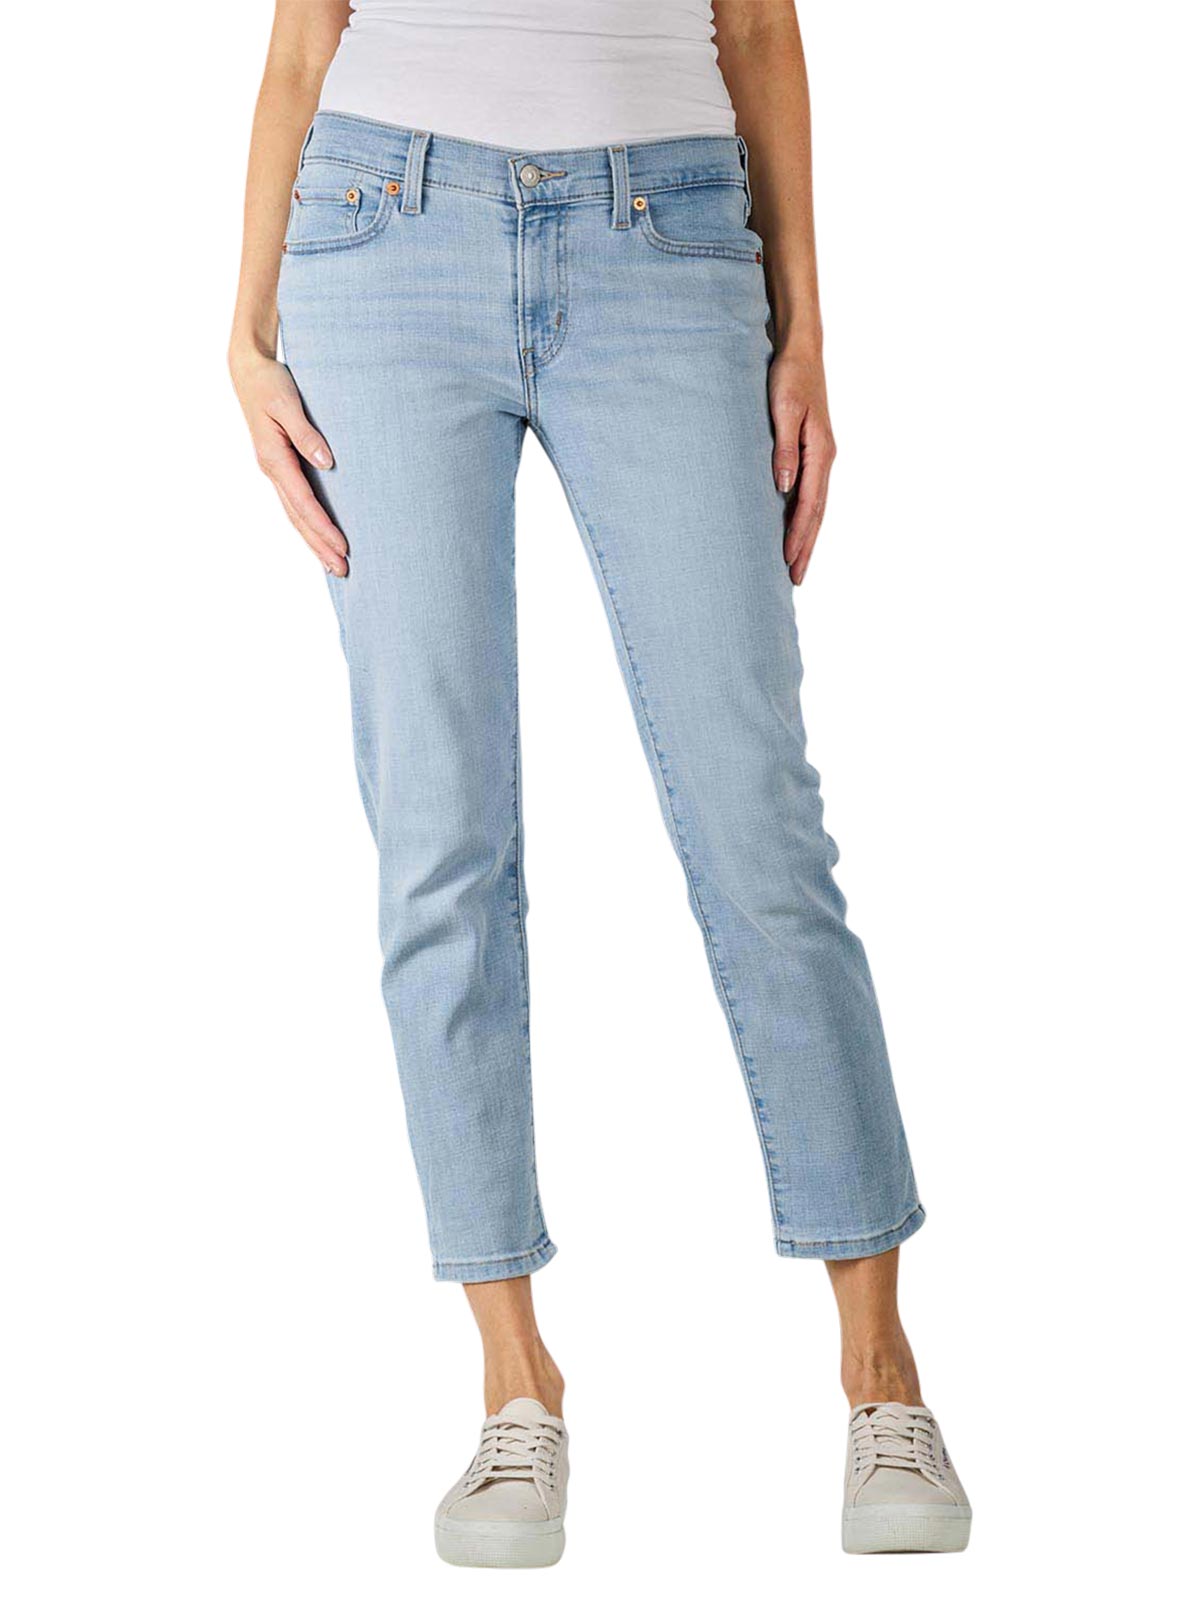 Levi's New Boyfriend Jeans Mid Rise slate era Levi's Women's Jeans | Free  Shipping on  - SIMPLY LOOK GOOD